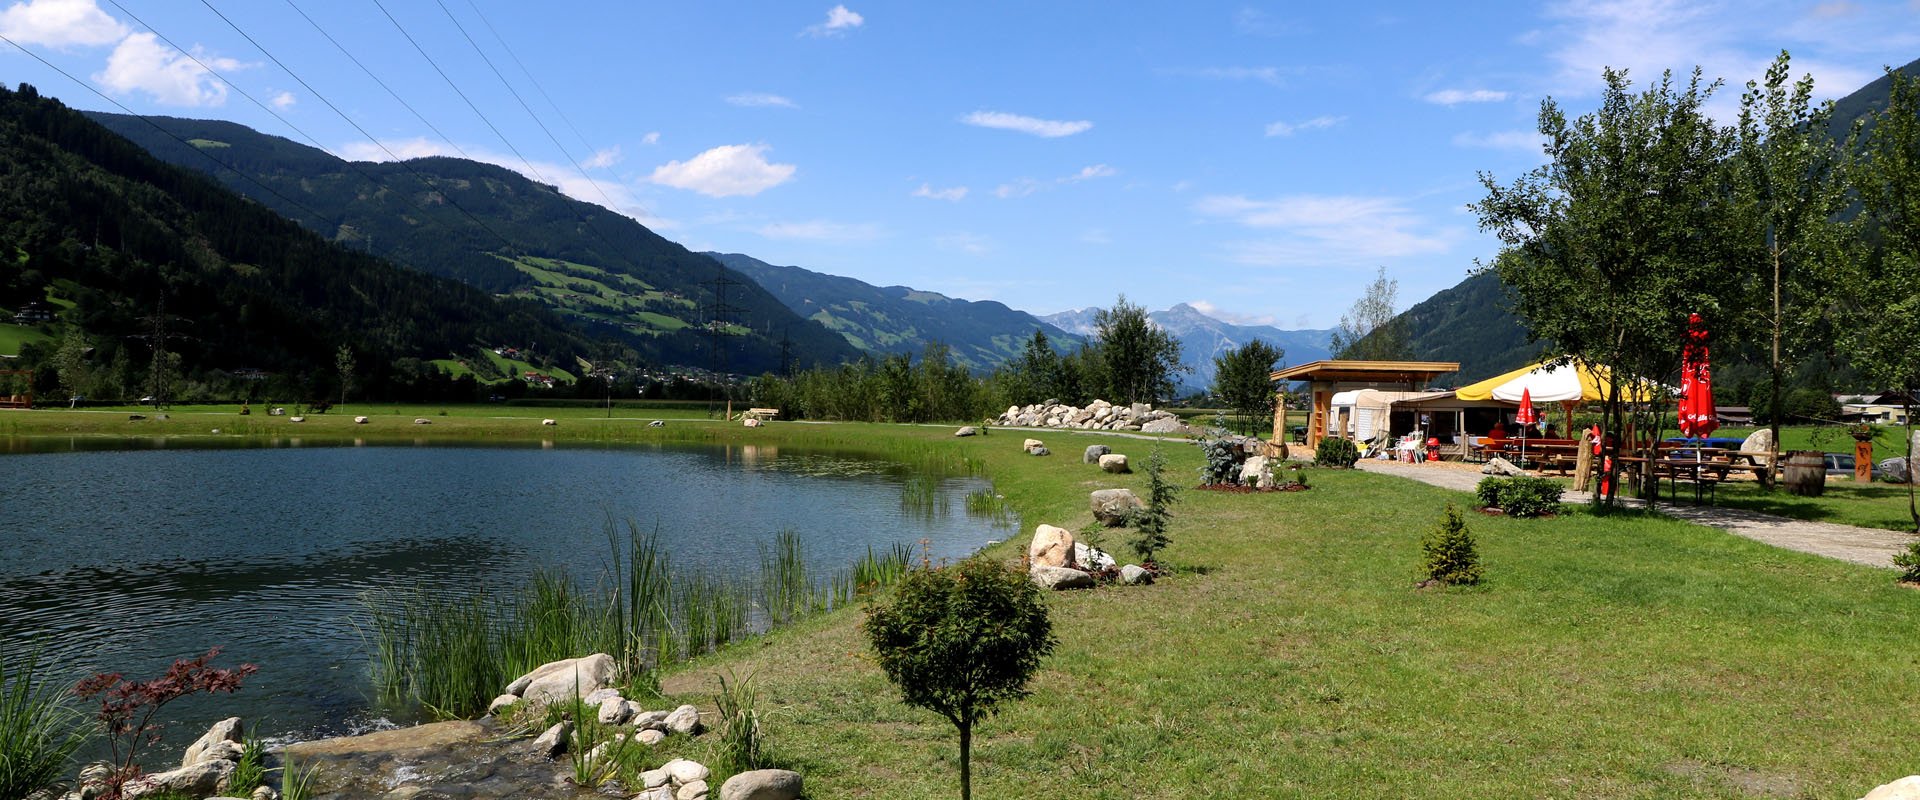 Bochra See in Stumm im Zillertal 